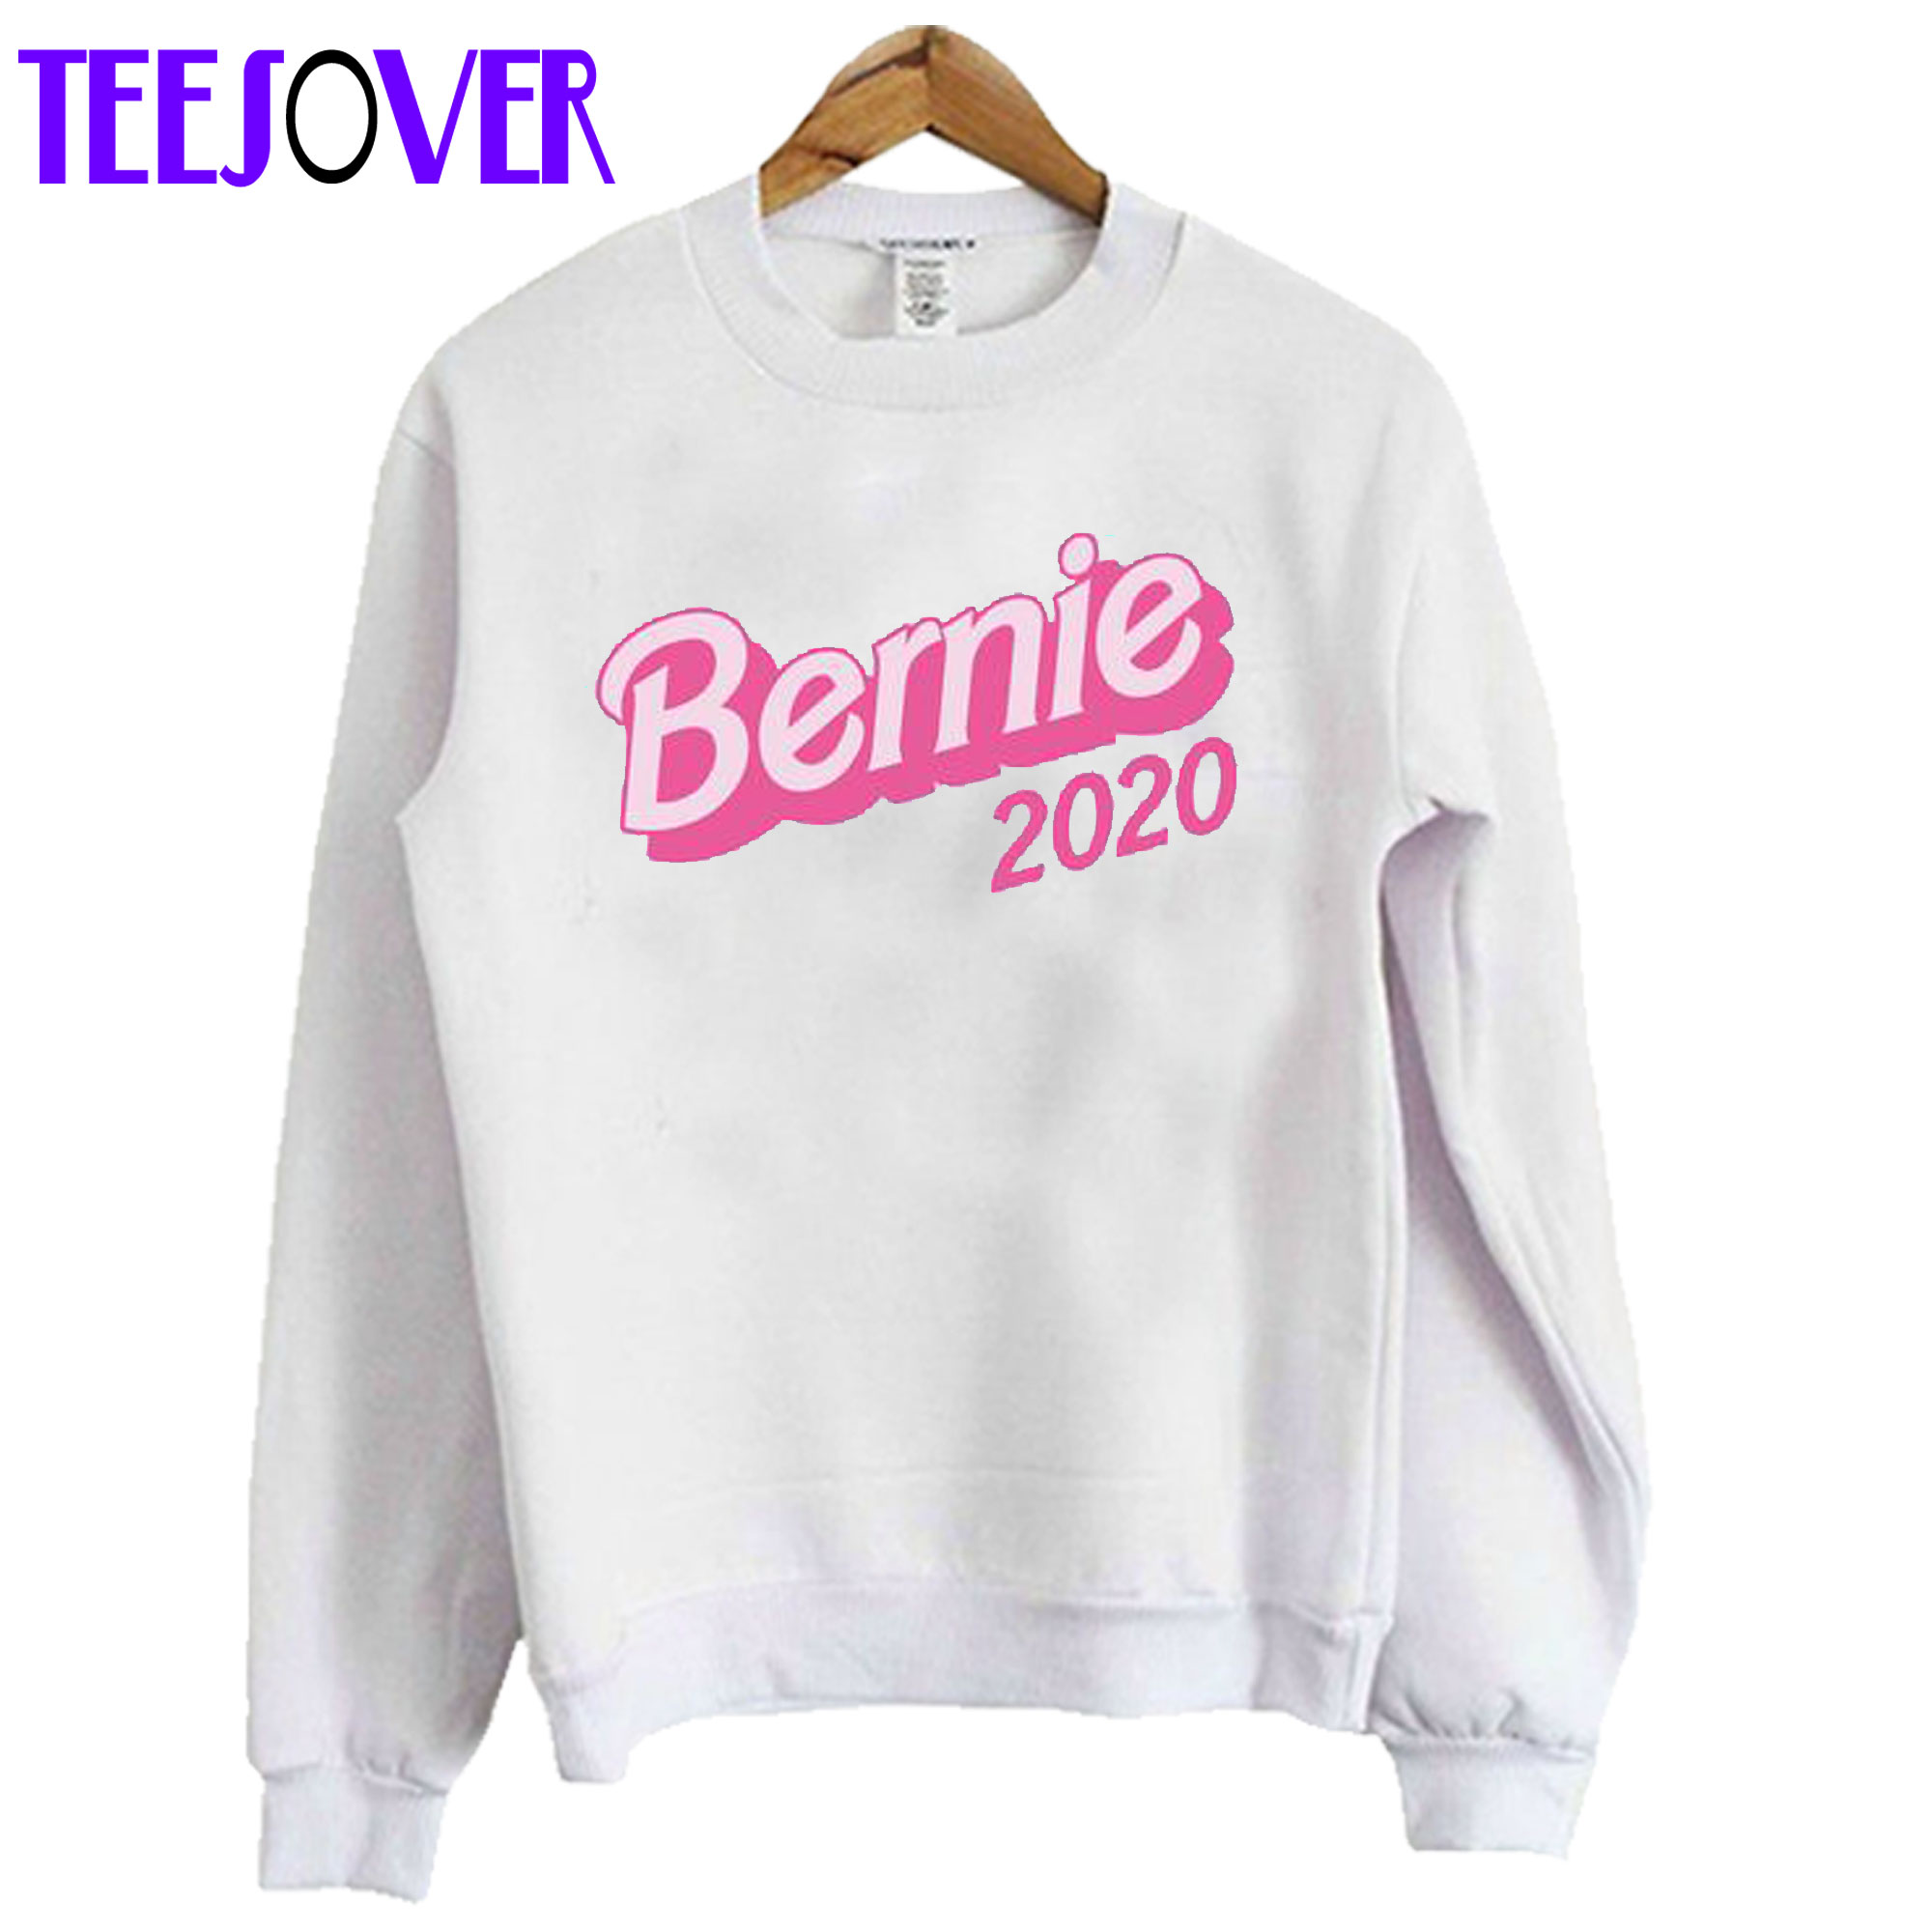 Bernie Pink Sweatshirt